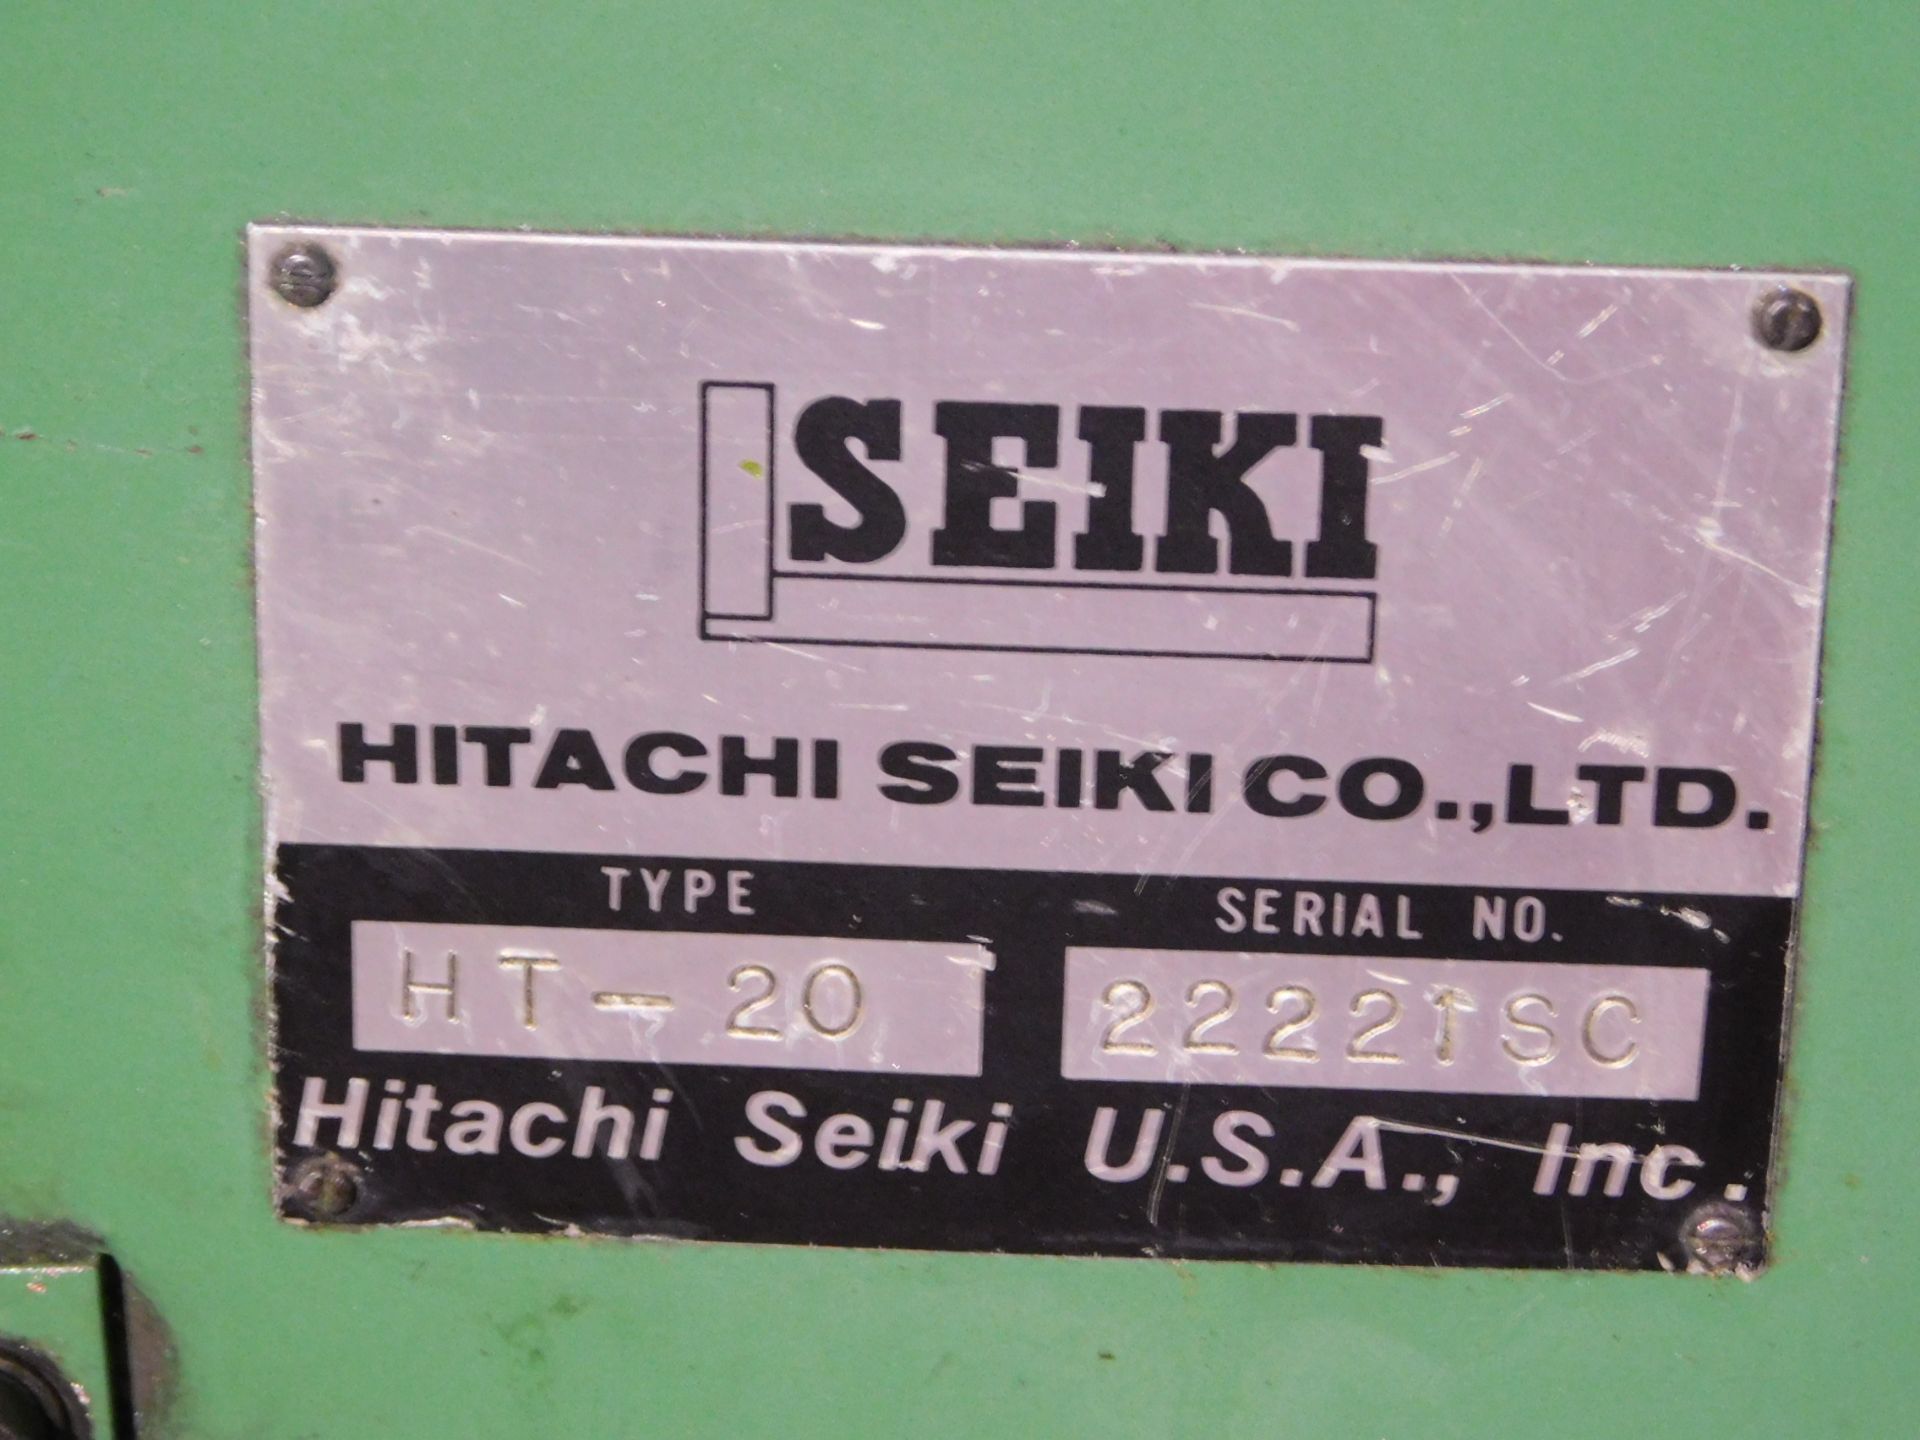 Hitachi Seiki Model HT-20 CNC Turning Center, s/n 22221SC, Seicos/Yasnac CNC Control, 8" 3-Jaw - Bild 10 aus 10